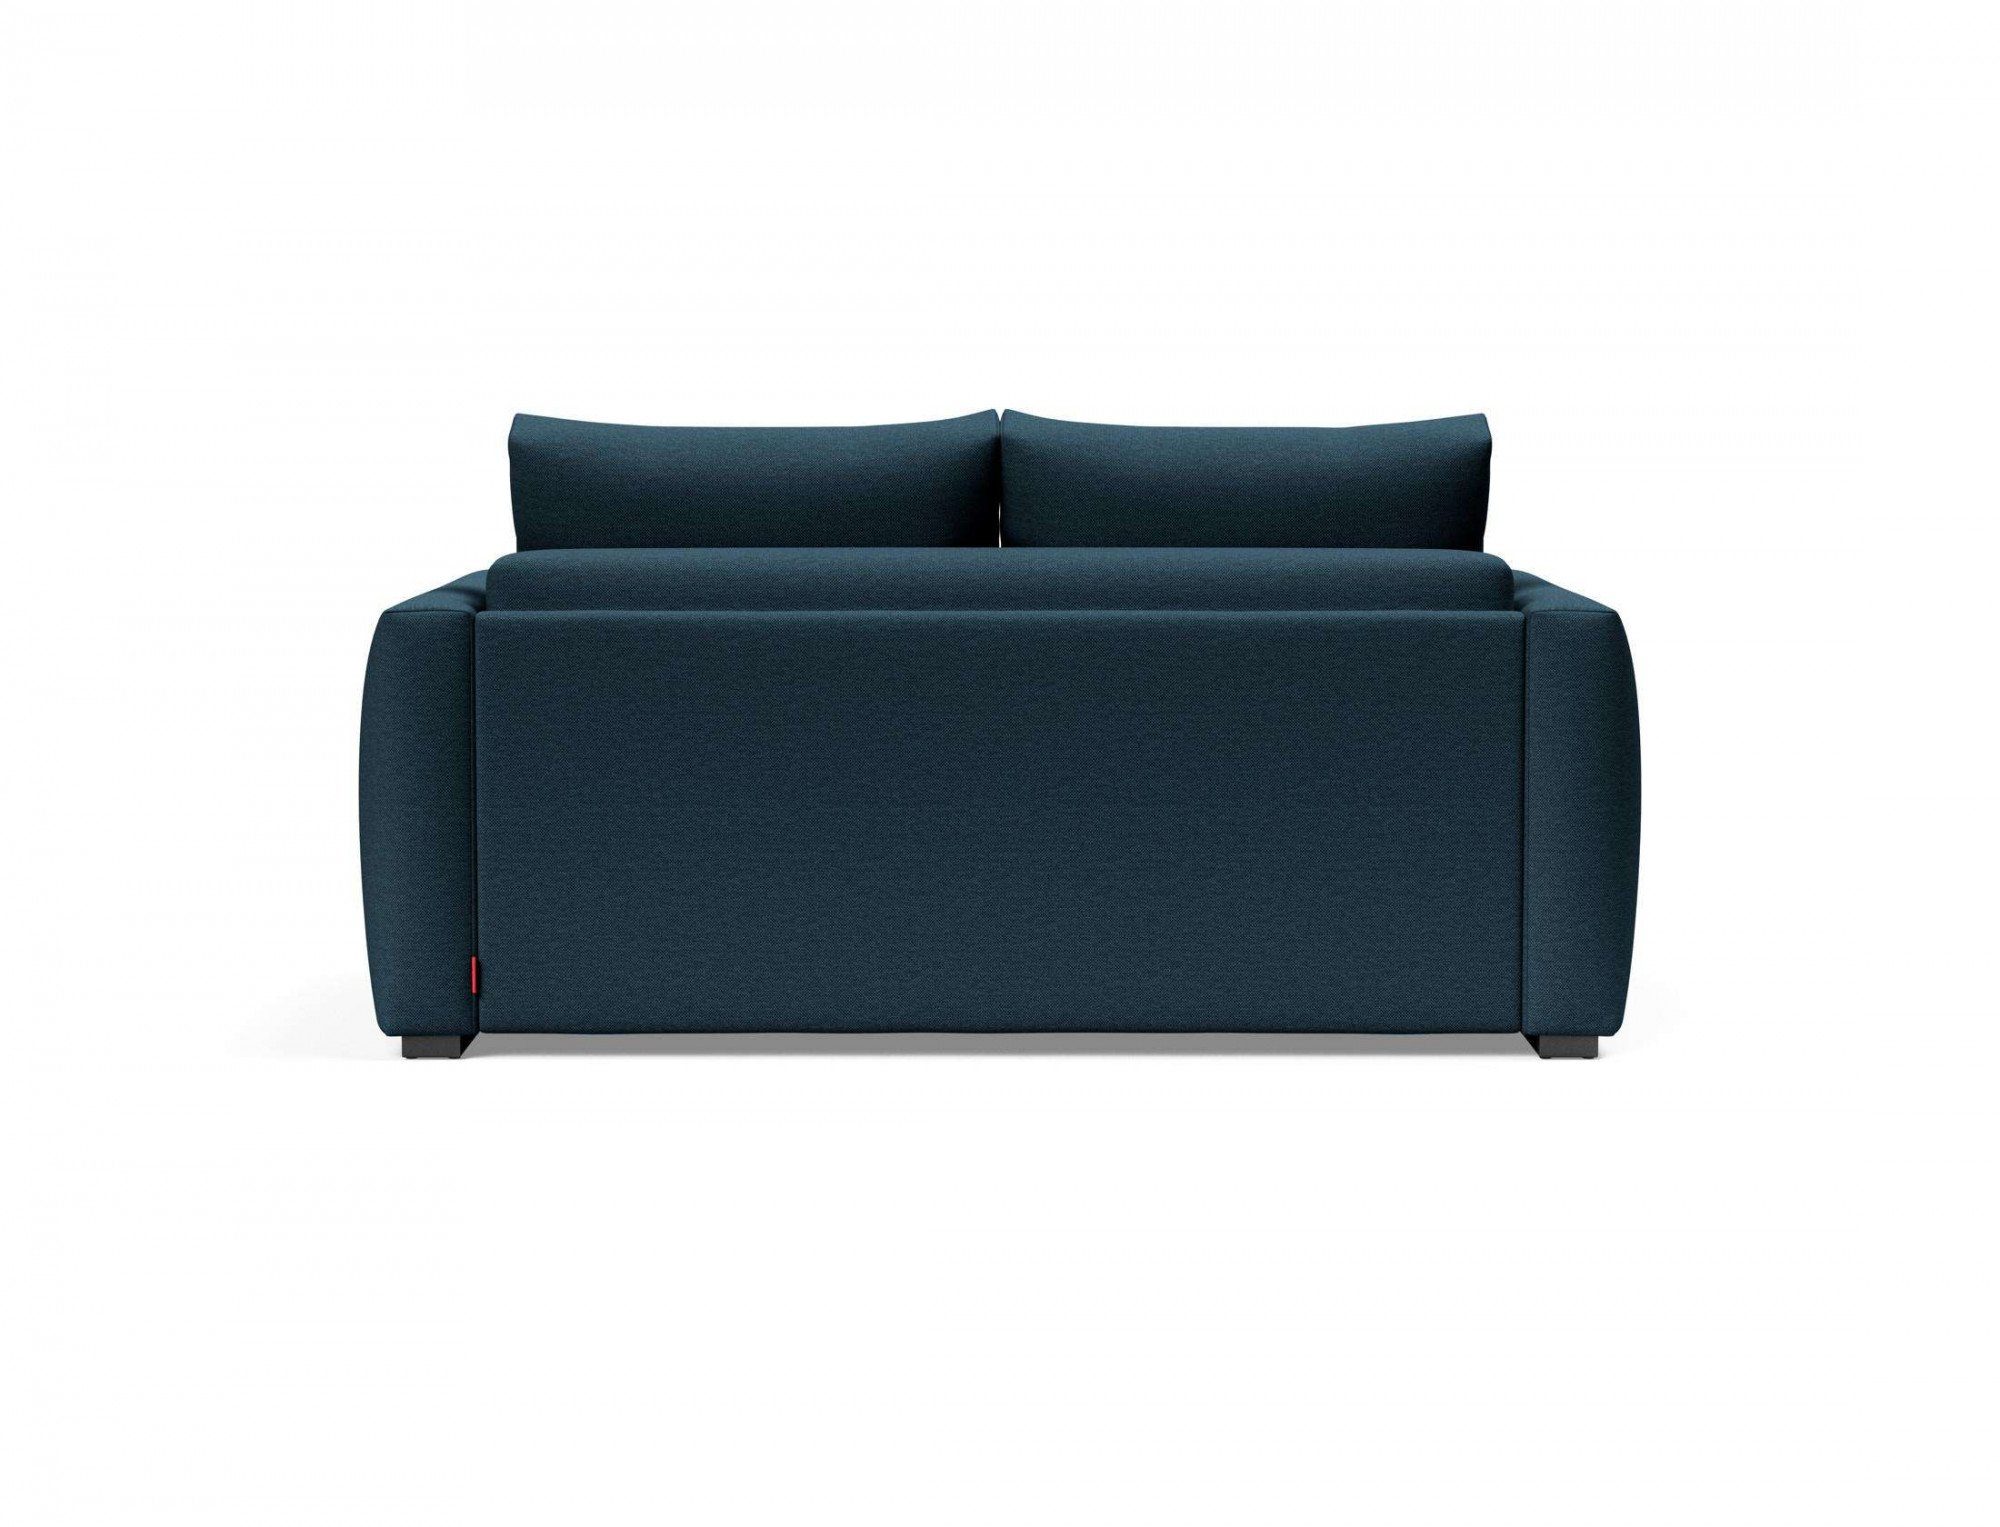 LIVING ™ Schlafsofa, kompaktes INNOVATION Teile, nordischem 1 Blue Navy mit 3-Sitzer komfortables, Cosial Charakter. Design kombiniert